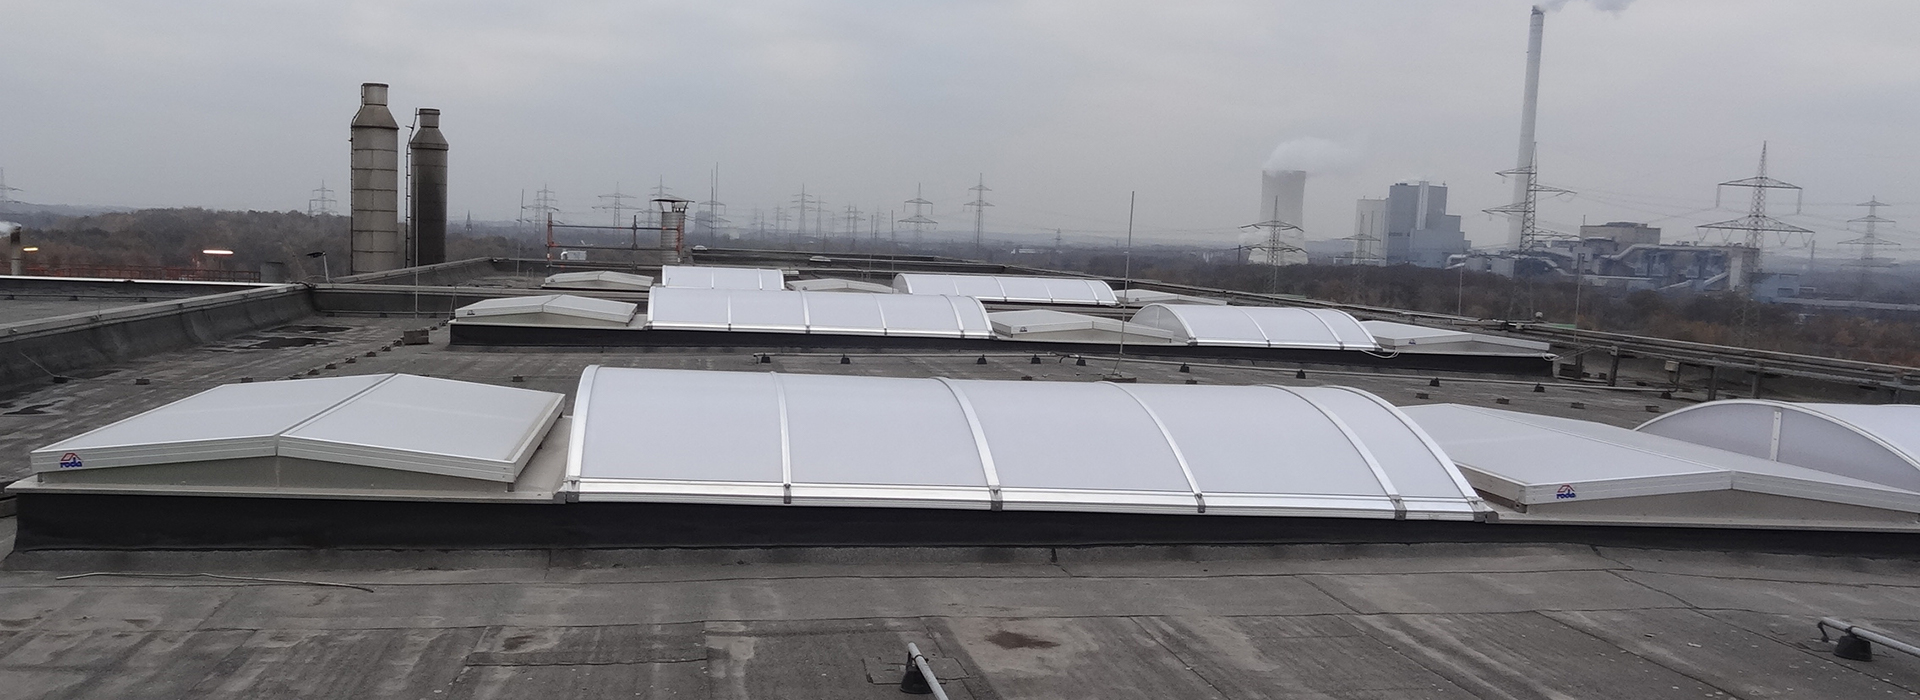 Polycarbonate double SHEV ventilators on roof closed